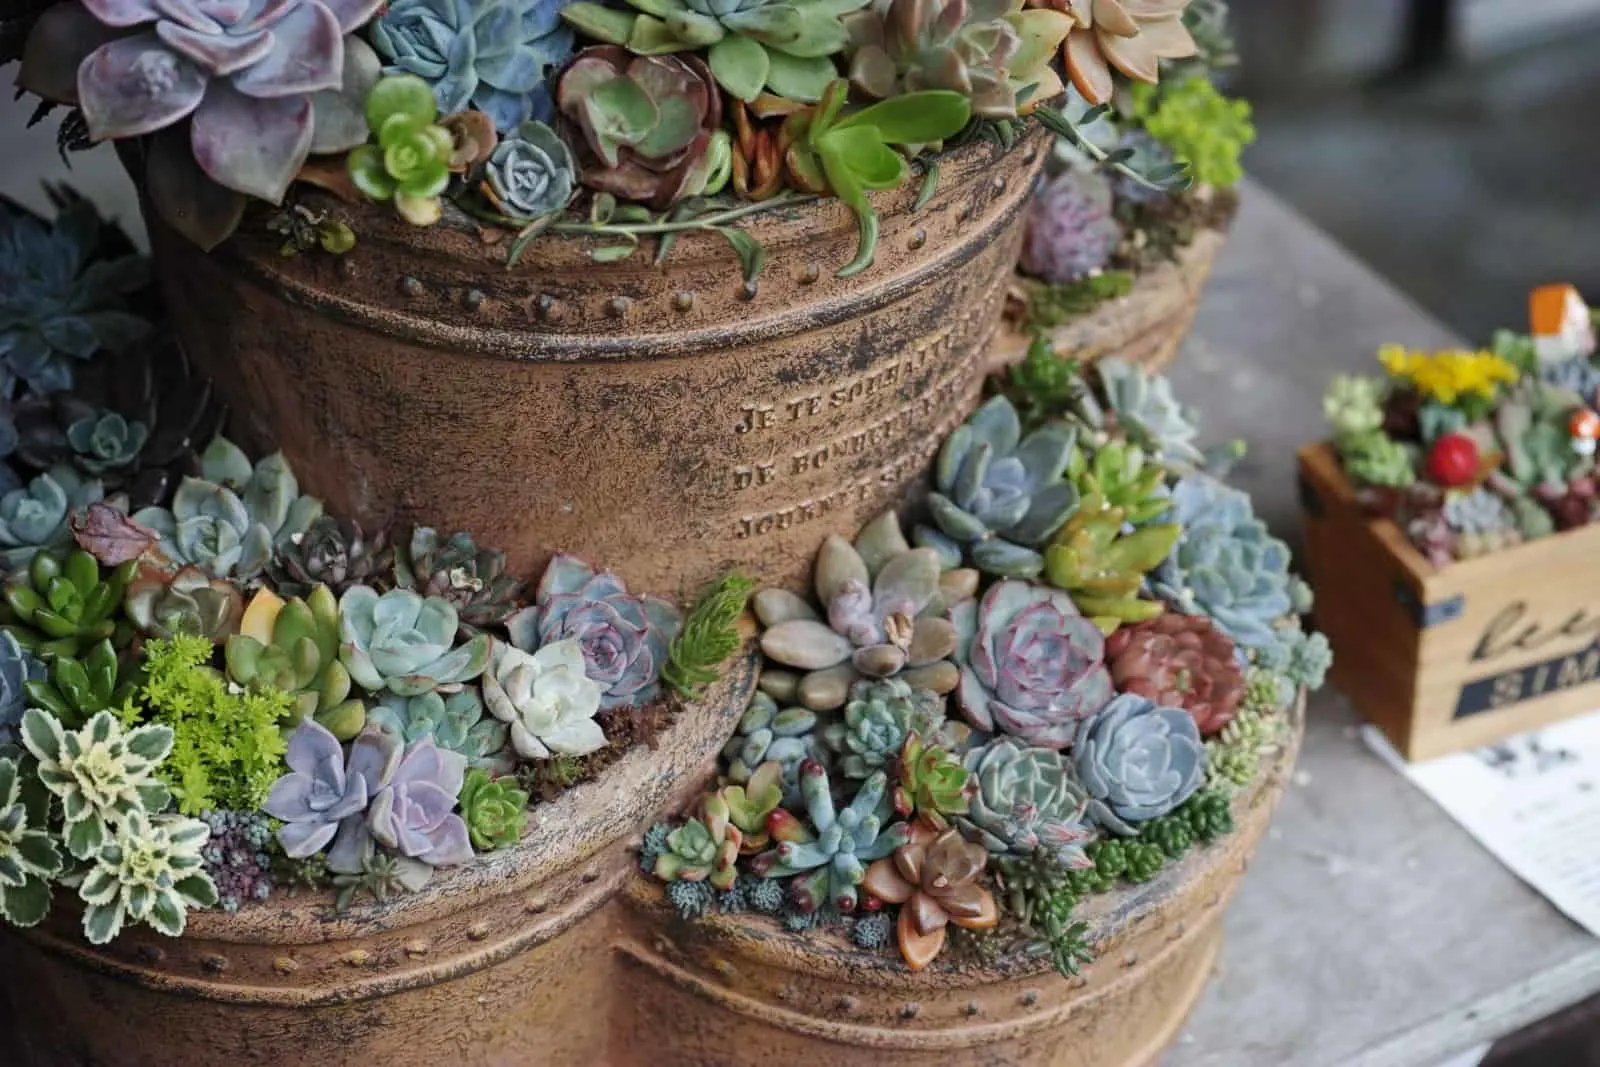 Succulent plant in terracotta pots